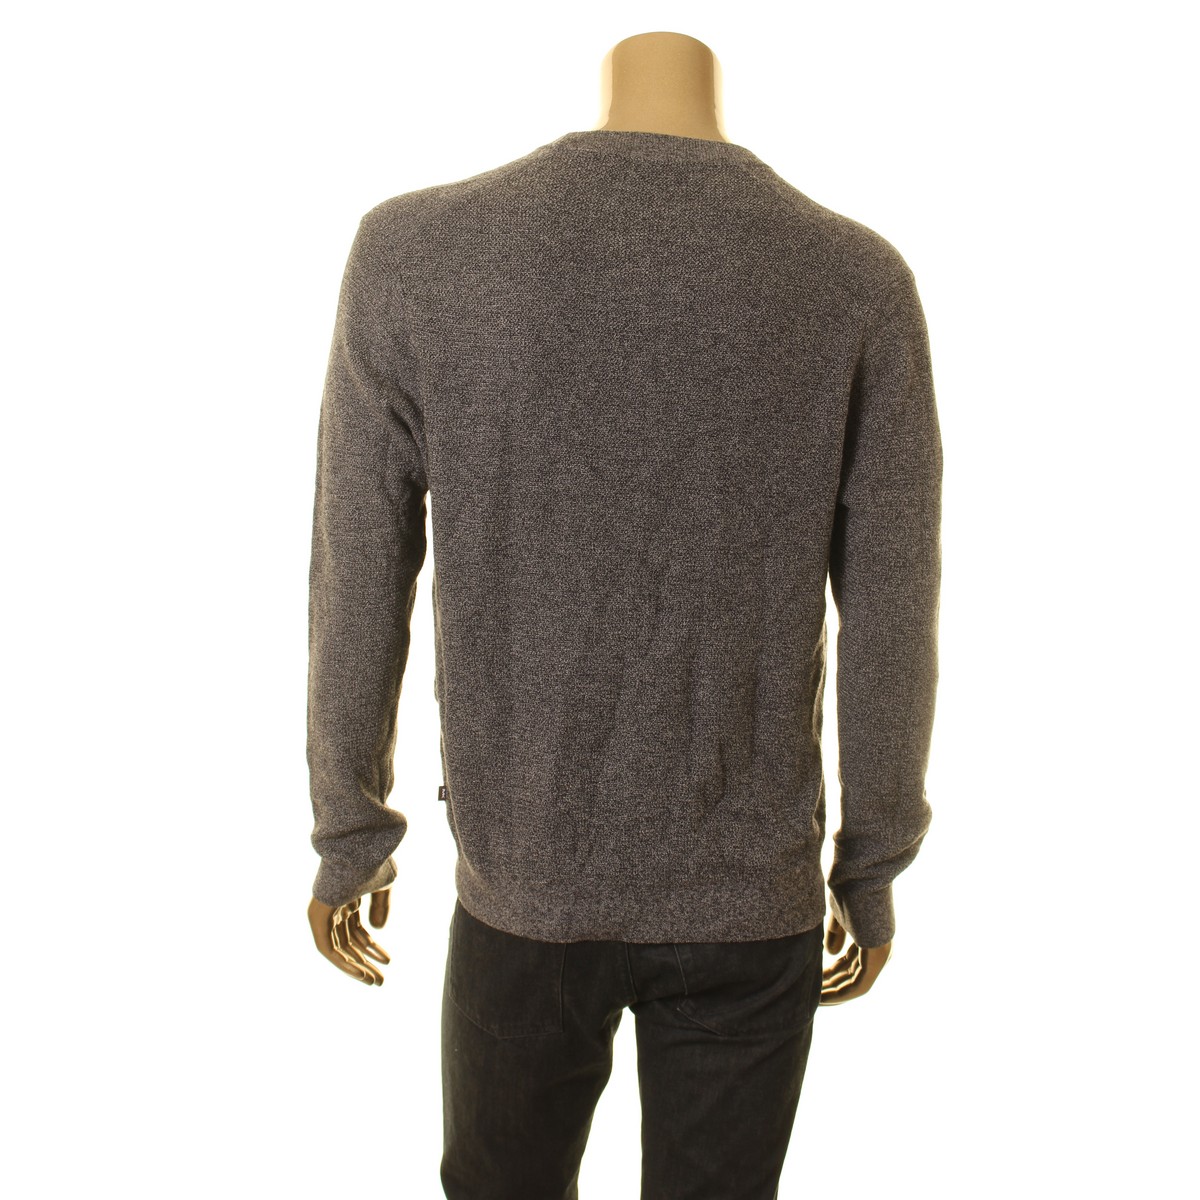 MICHAEL KORS NEW Men's Merino Wool Blend Crewneck Sweater TEDO | eBay